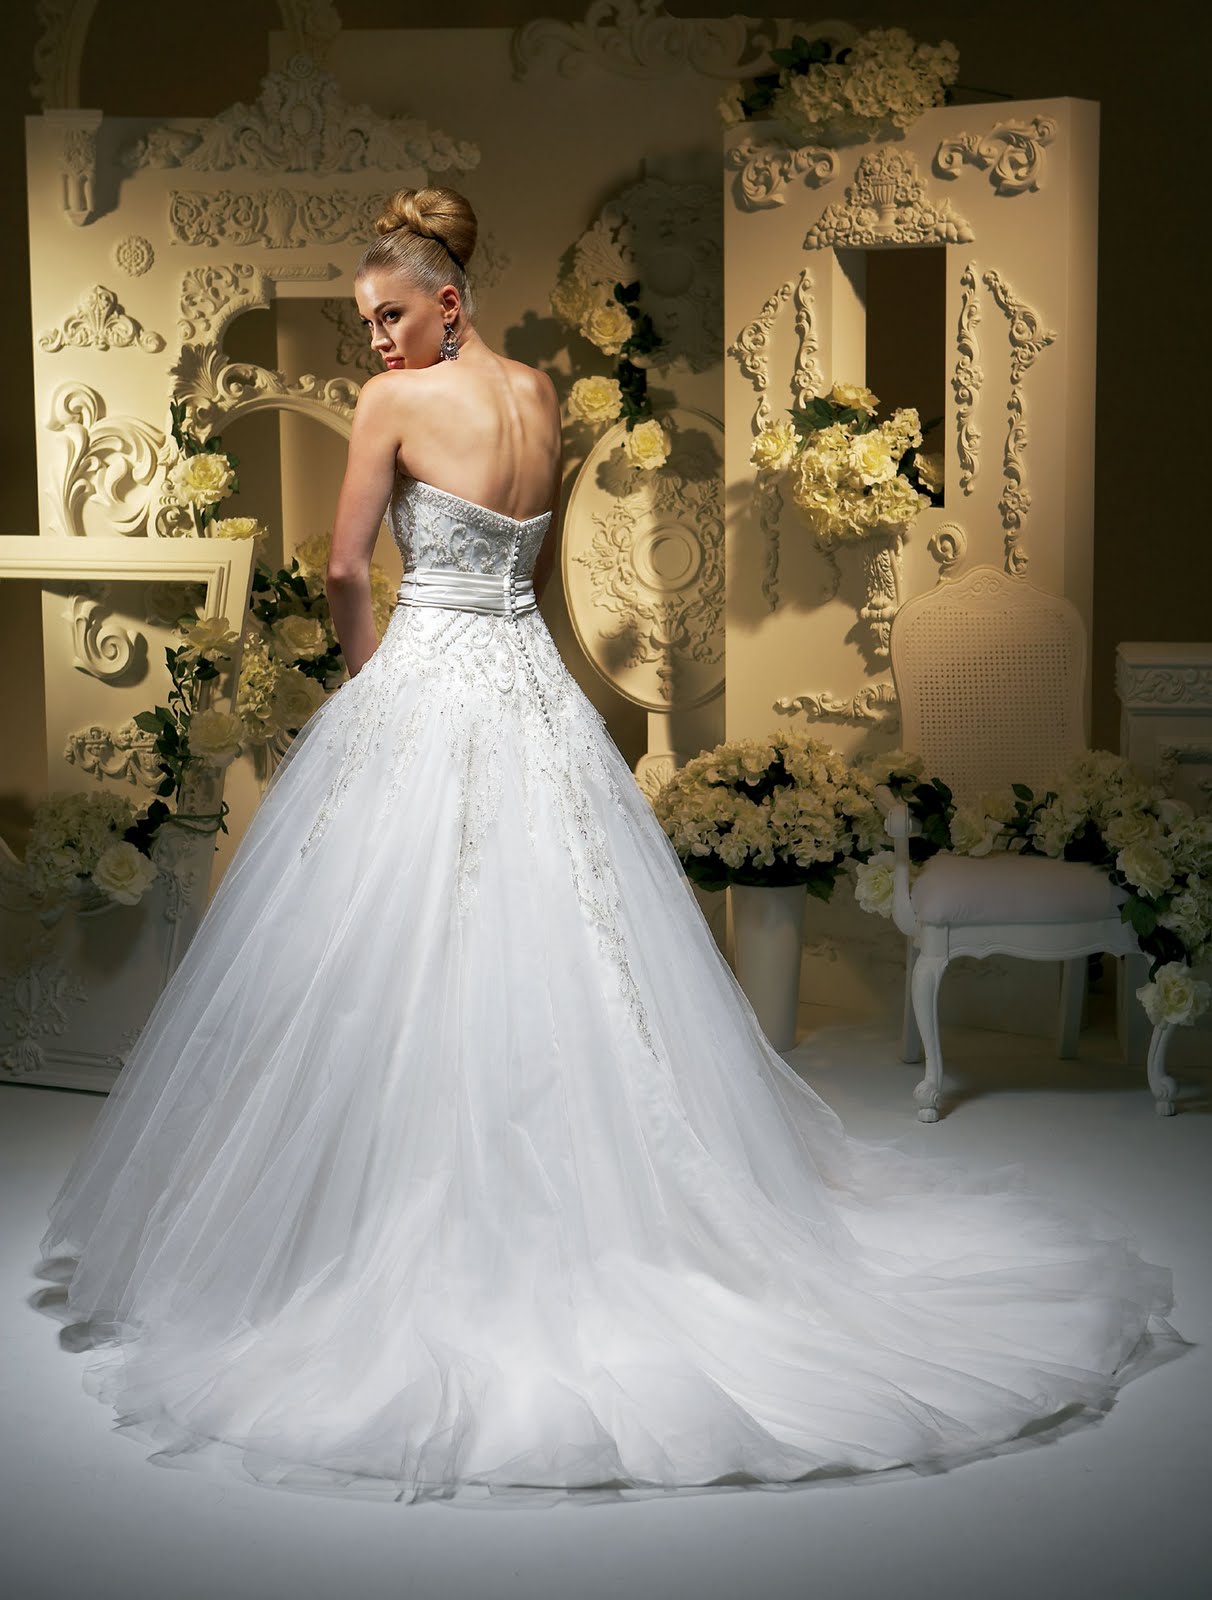 Elegant Bridal  Dress  Jasmine Couture Temple  Ready  Wedding  